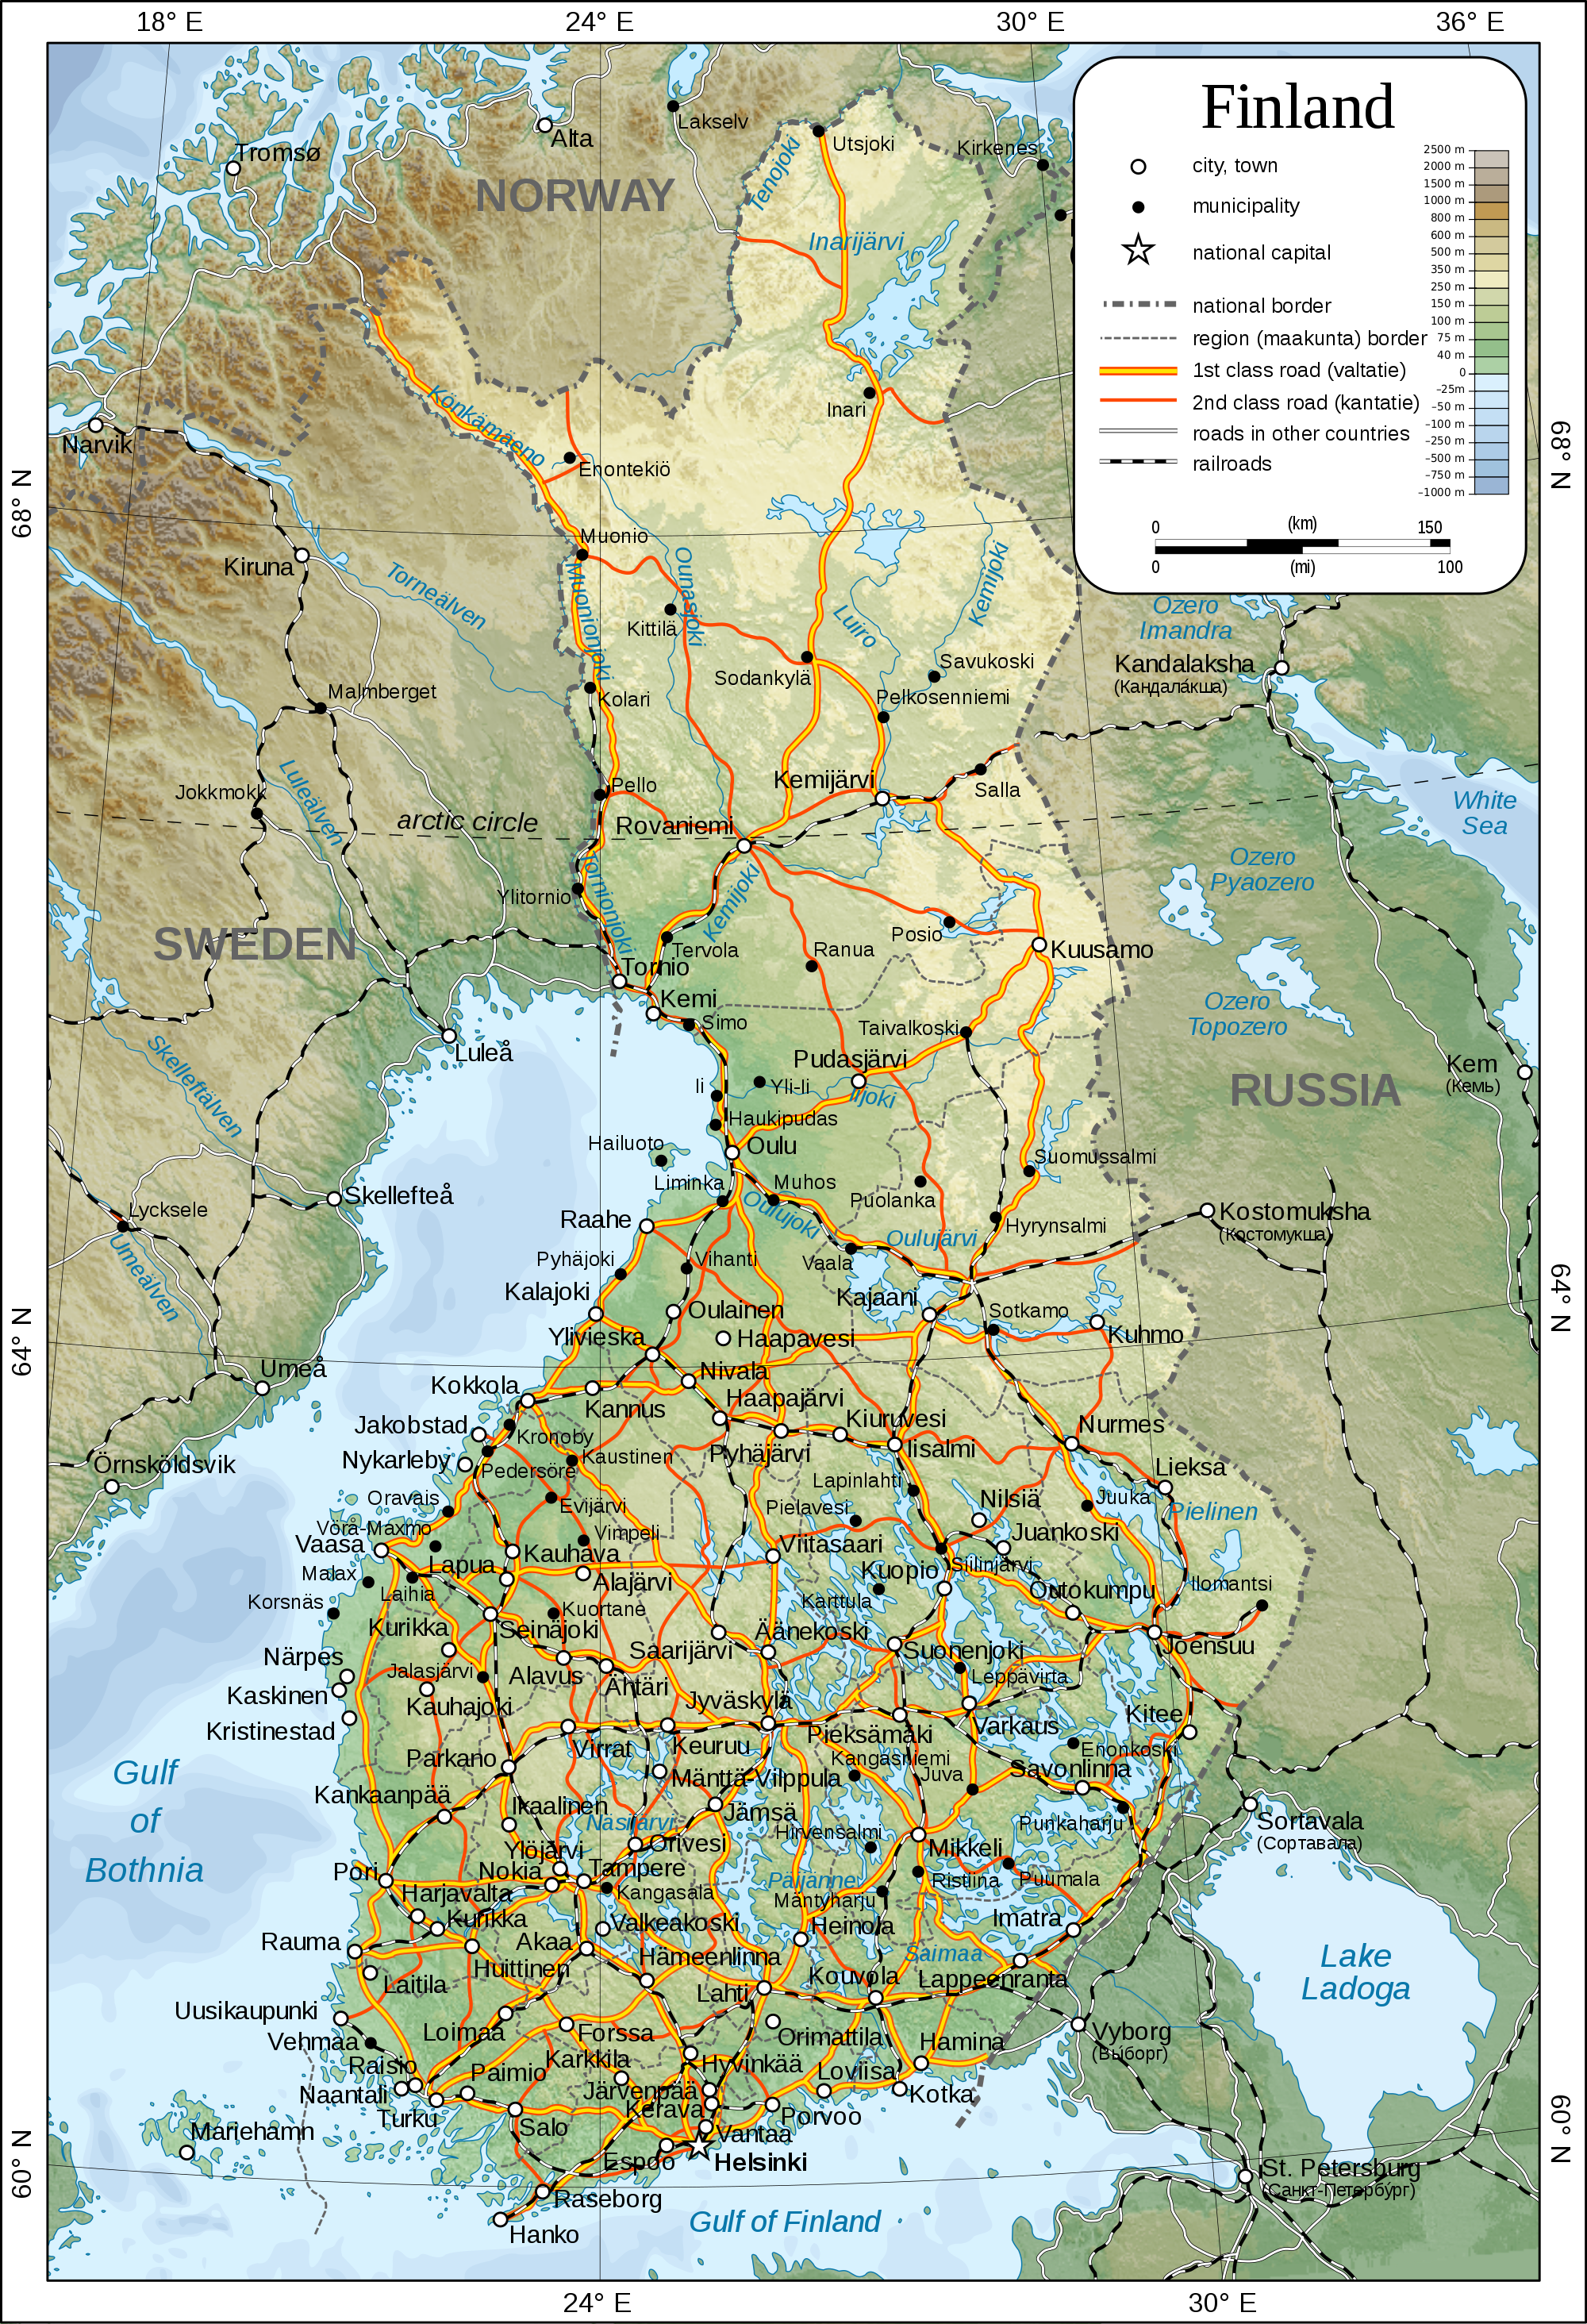 Finland - Wikipedia, the free encyclopedia